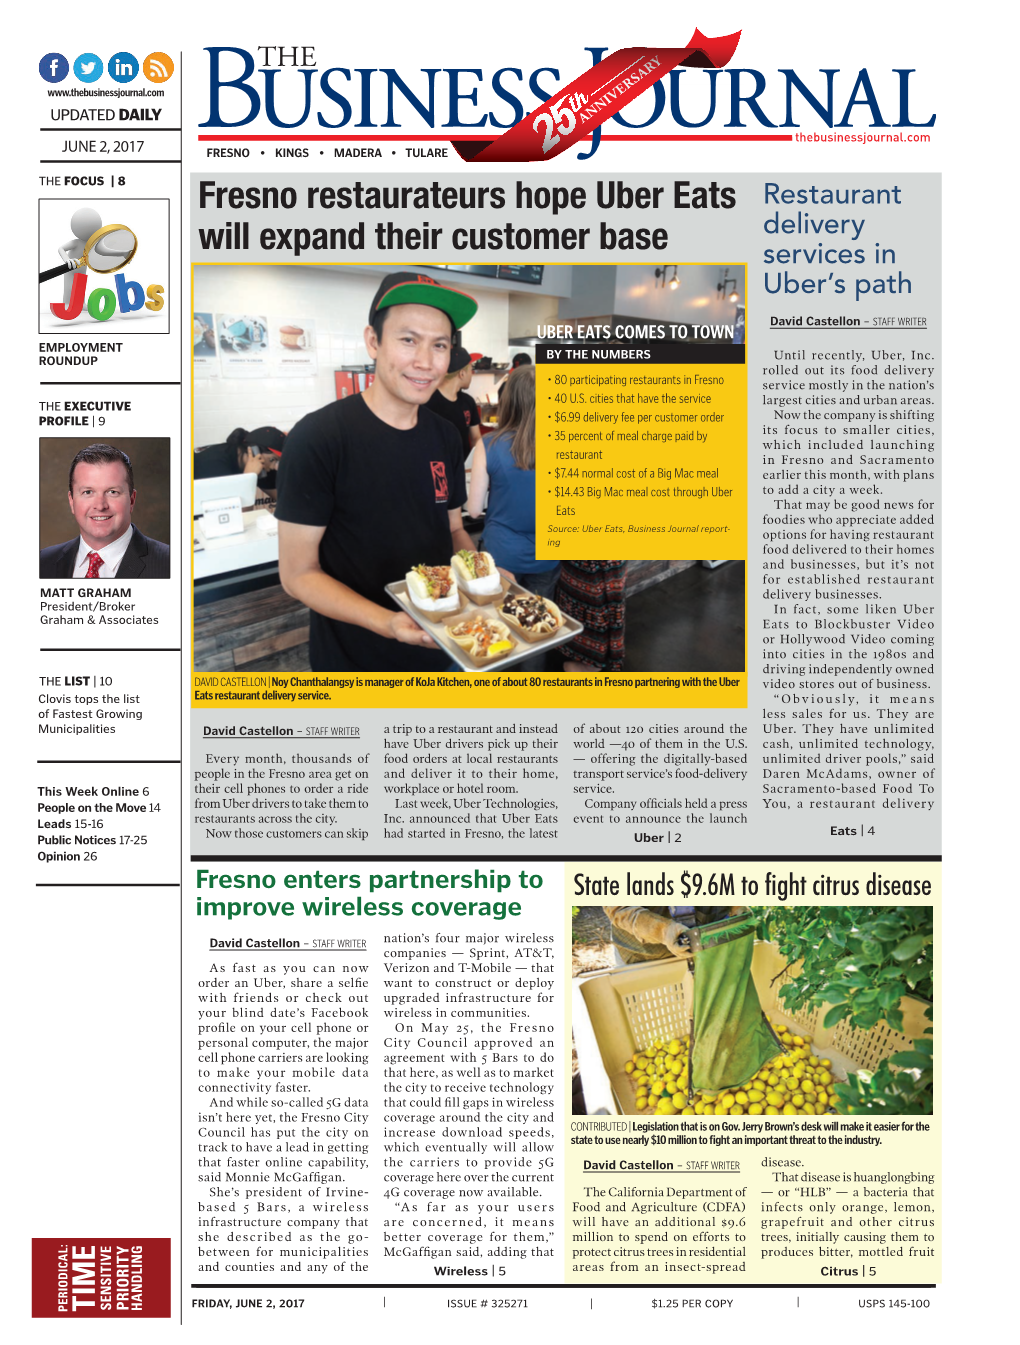 Fresno Restaurateurs Hope Uber Eats Will Expand Their Customer Base